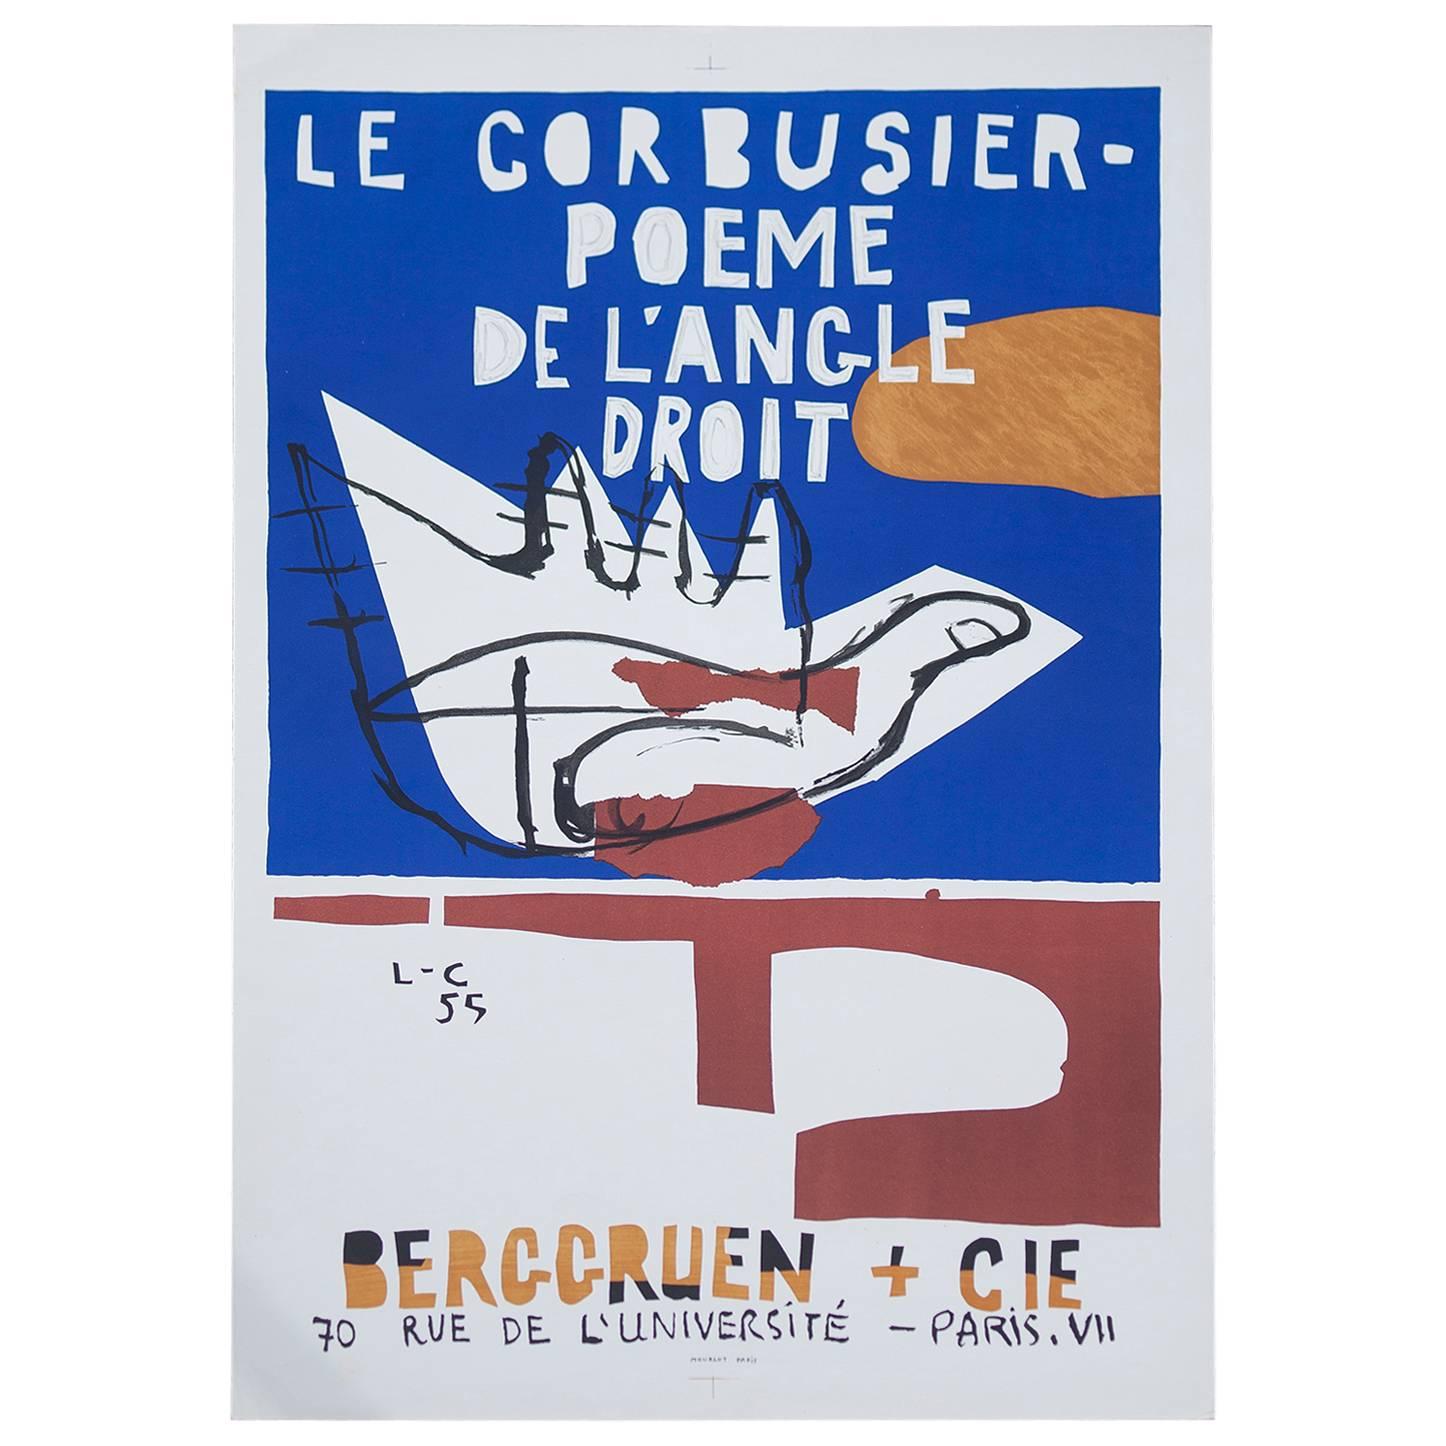 Rare Corbusier Exhibition Poster Poeme De L’Angle Droit, 1955